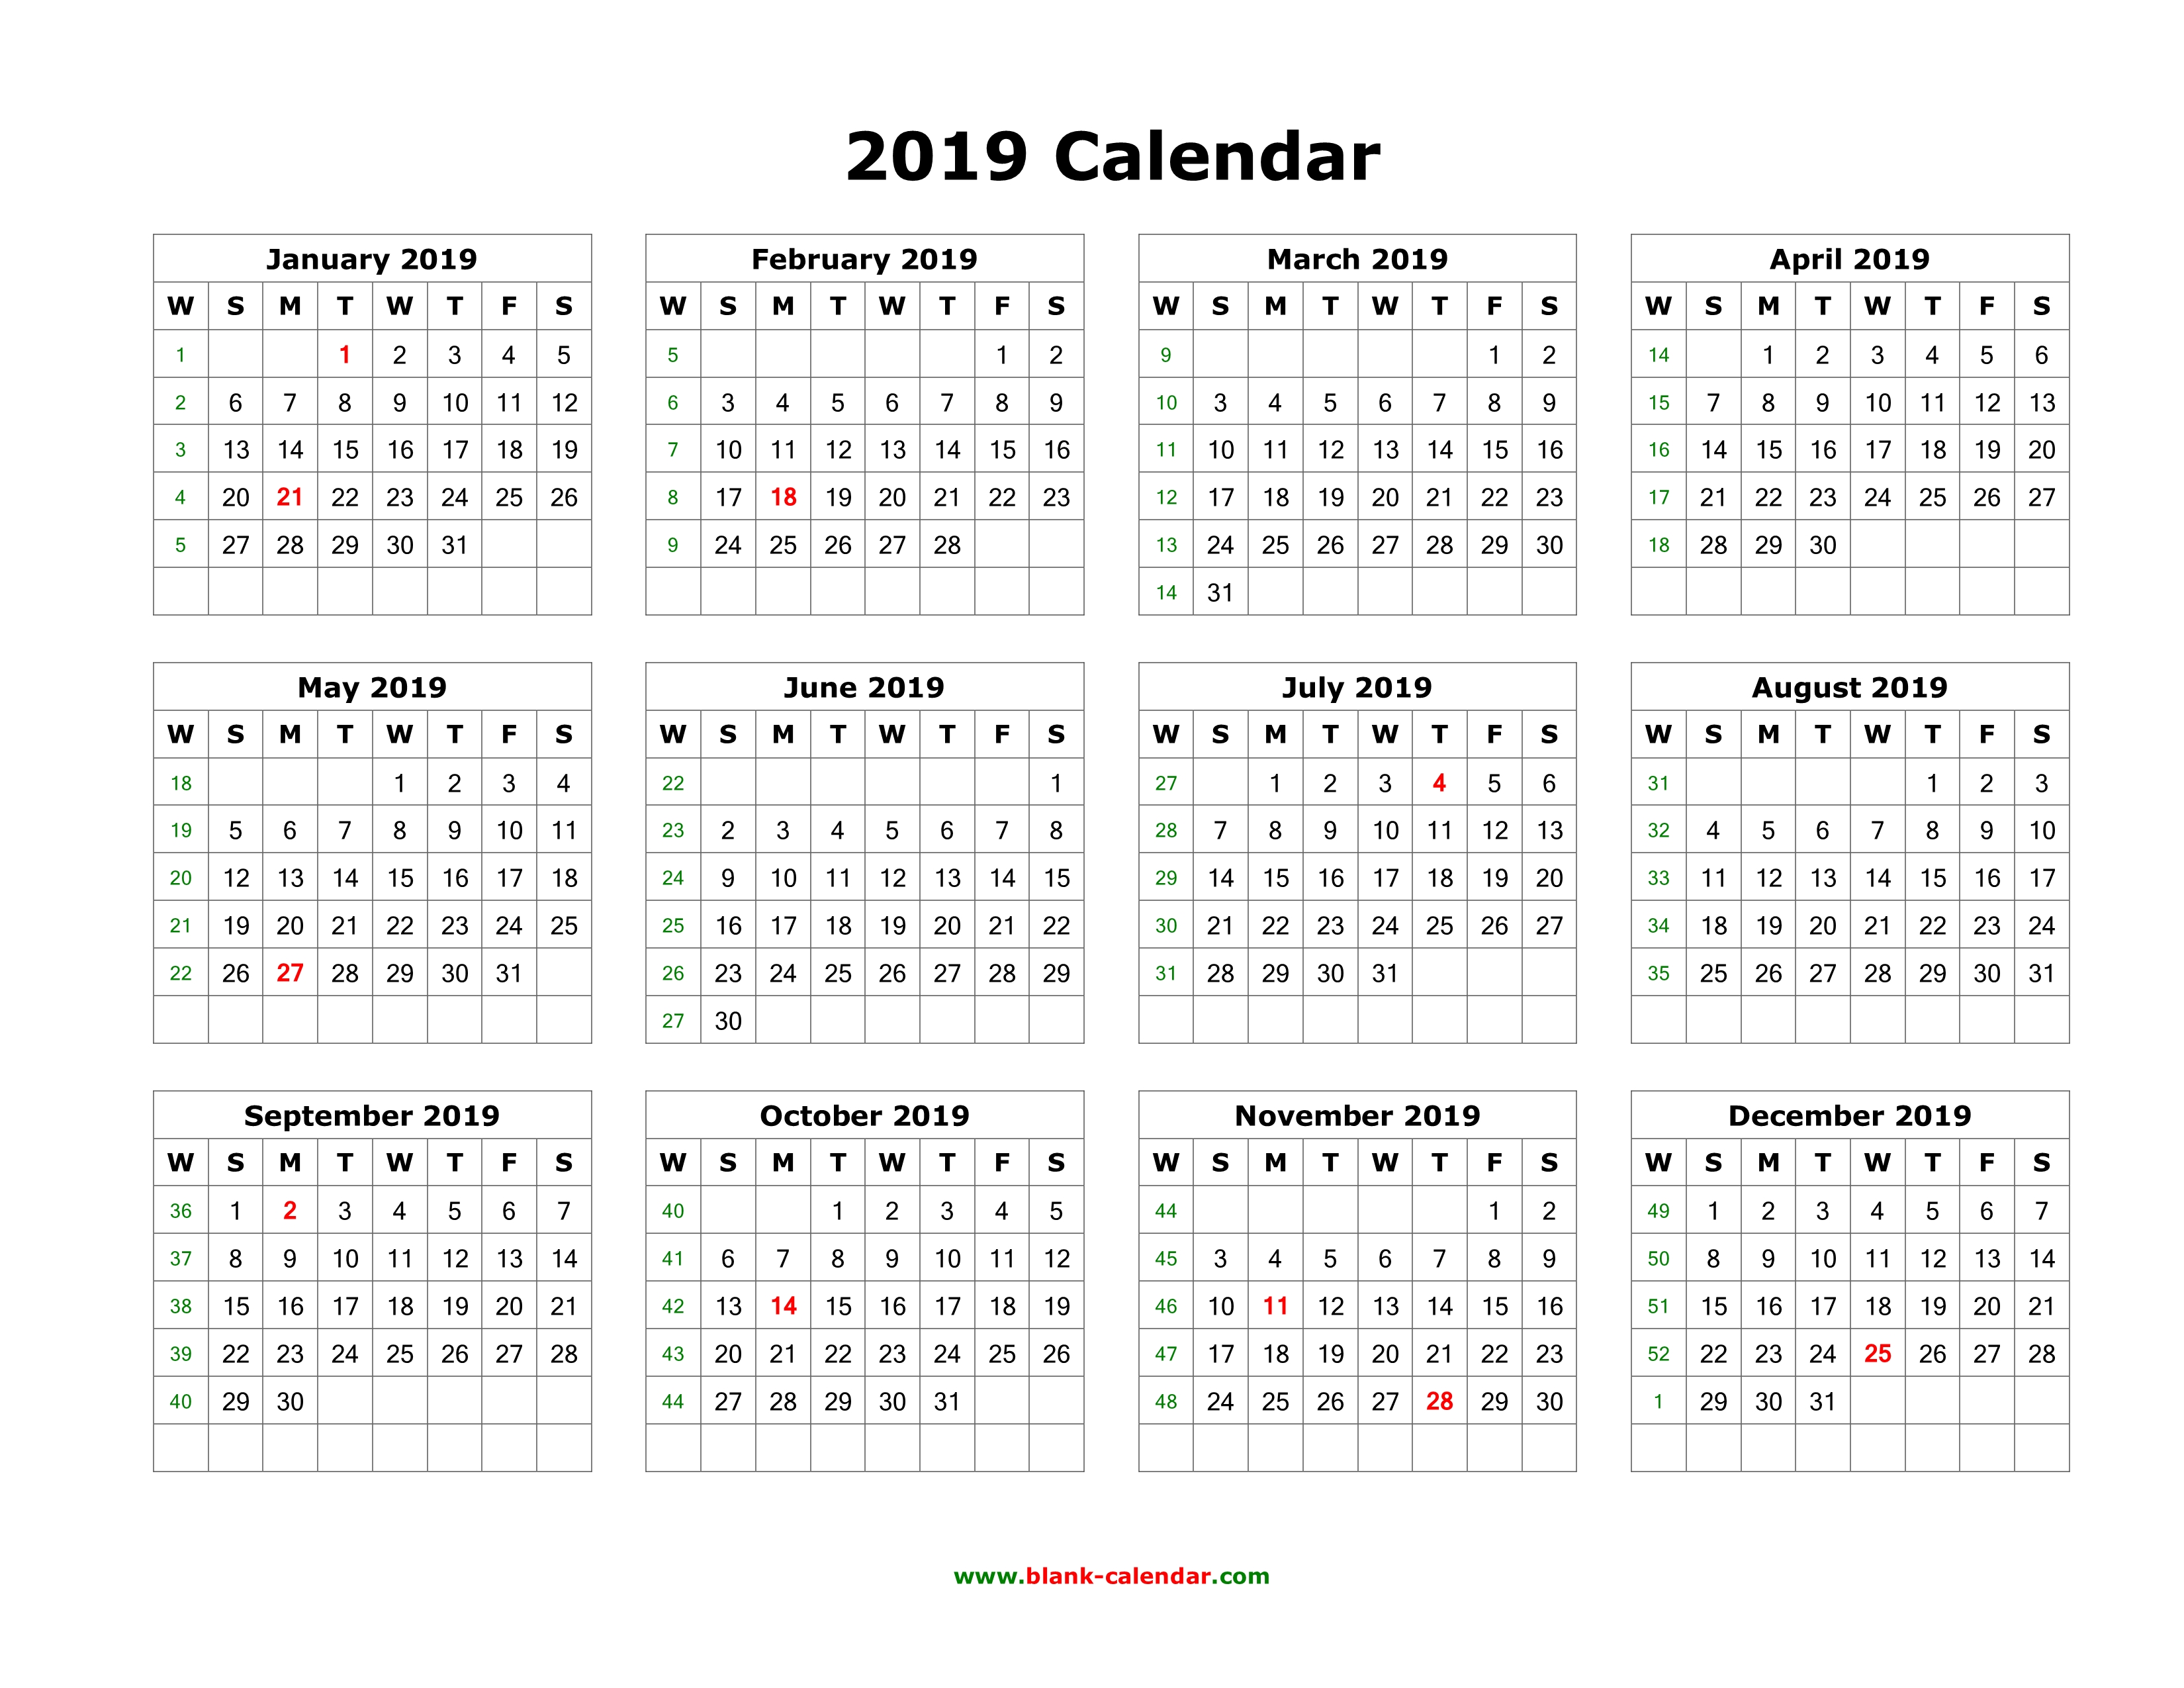 2 month page 2019 calendar templates